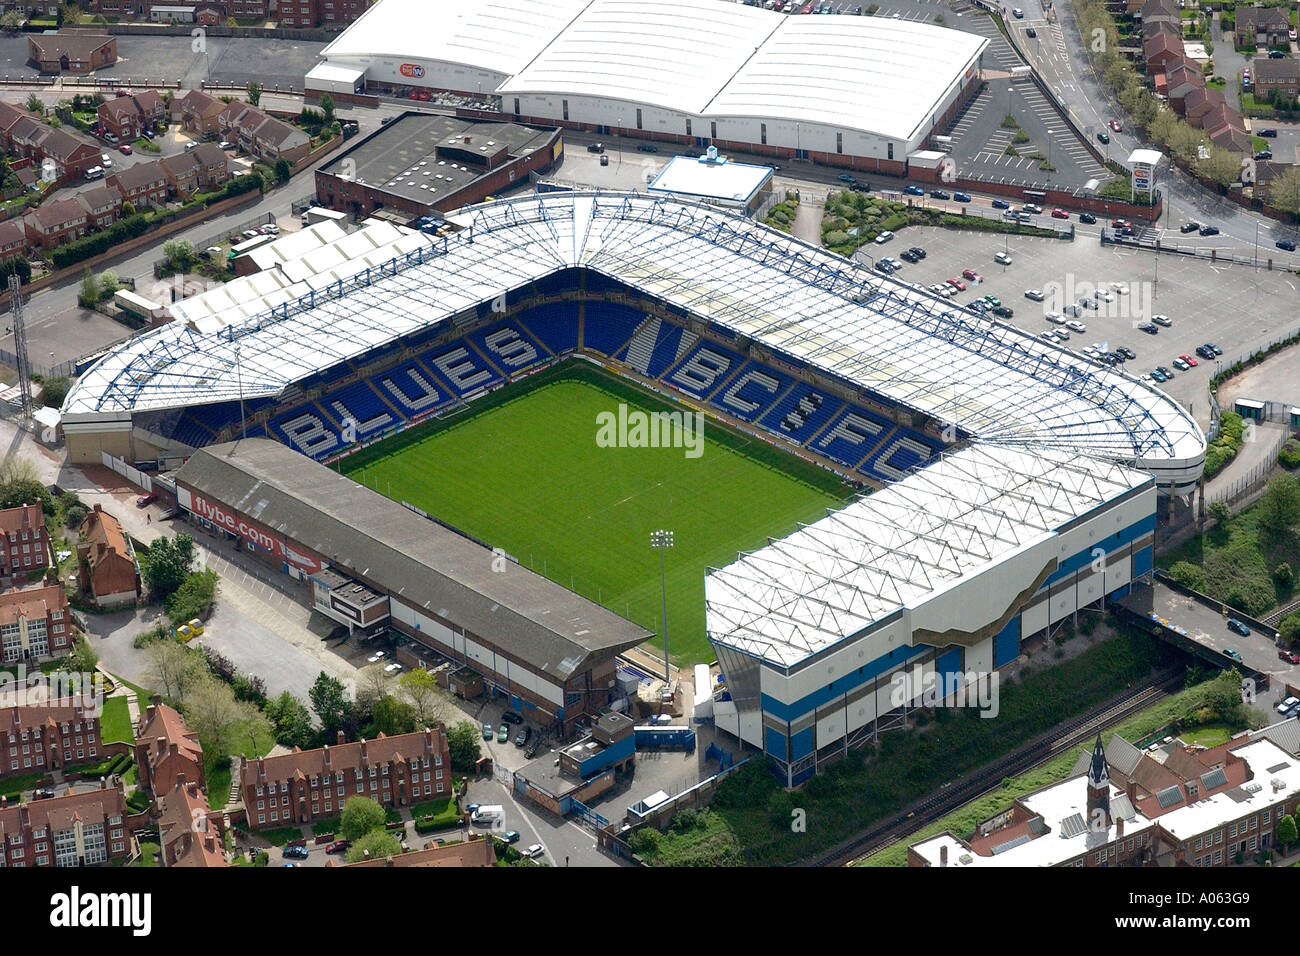 [Image: aerial-view-of-birmingham-city-football-...A063G9.jpg]